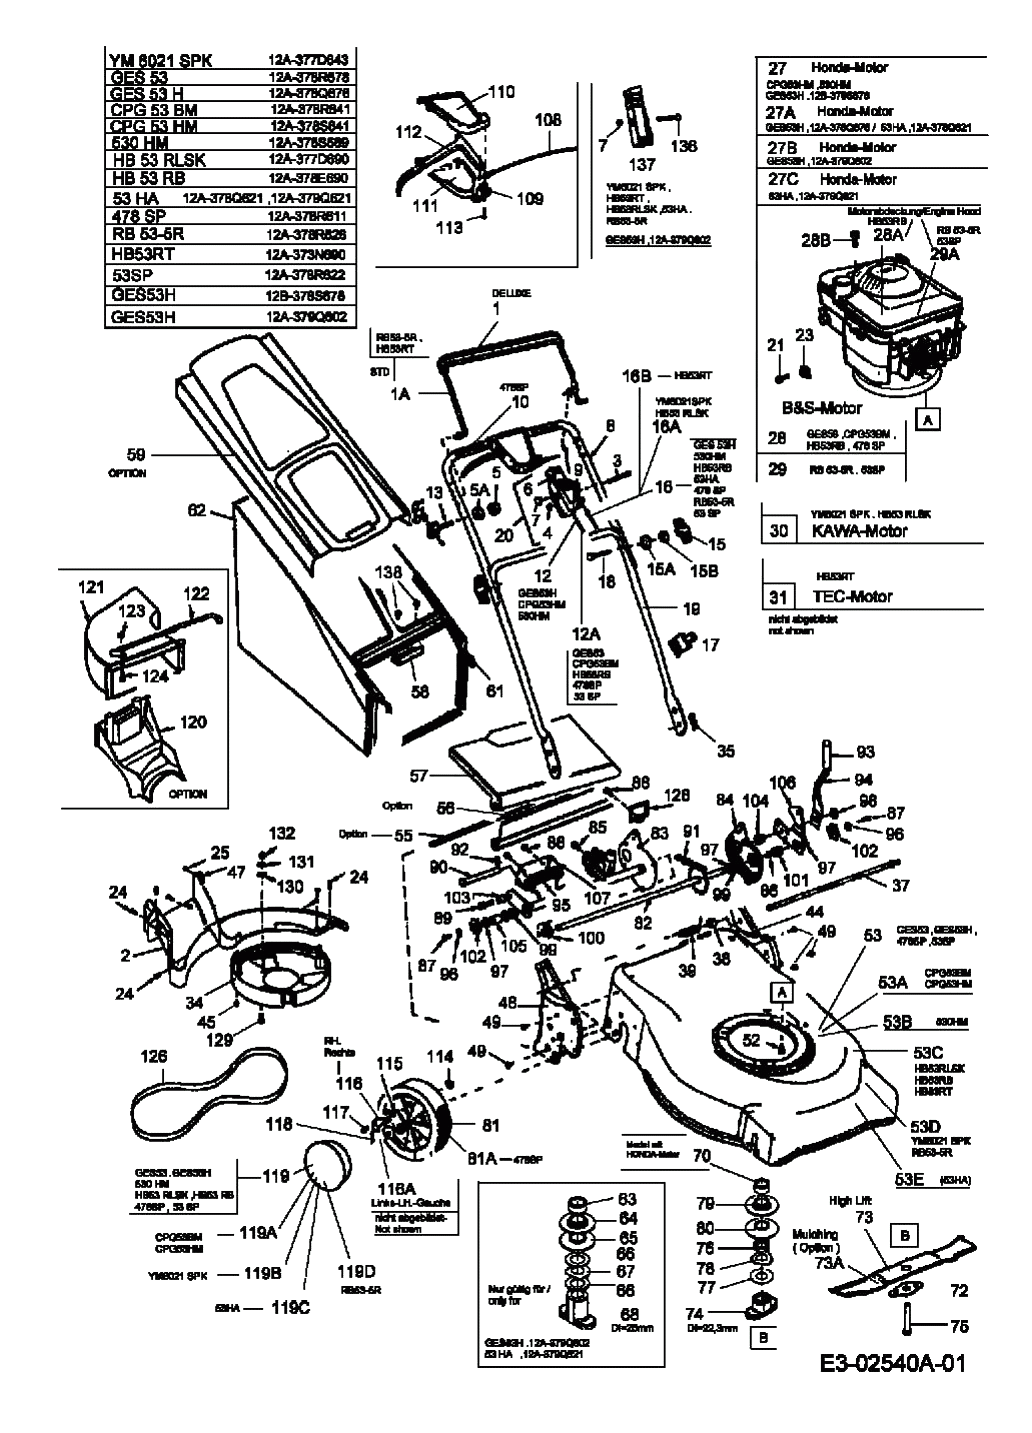 MTD Артикул 12A-378R622 (год выпуска 2005). Основная деталировка